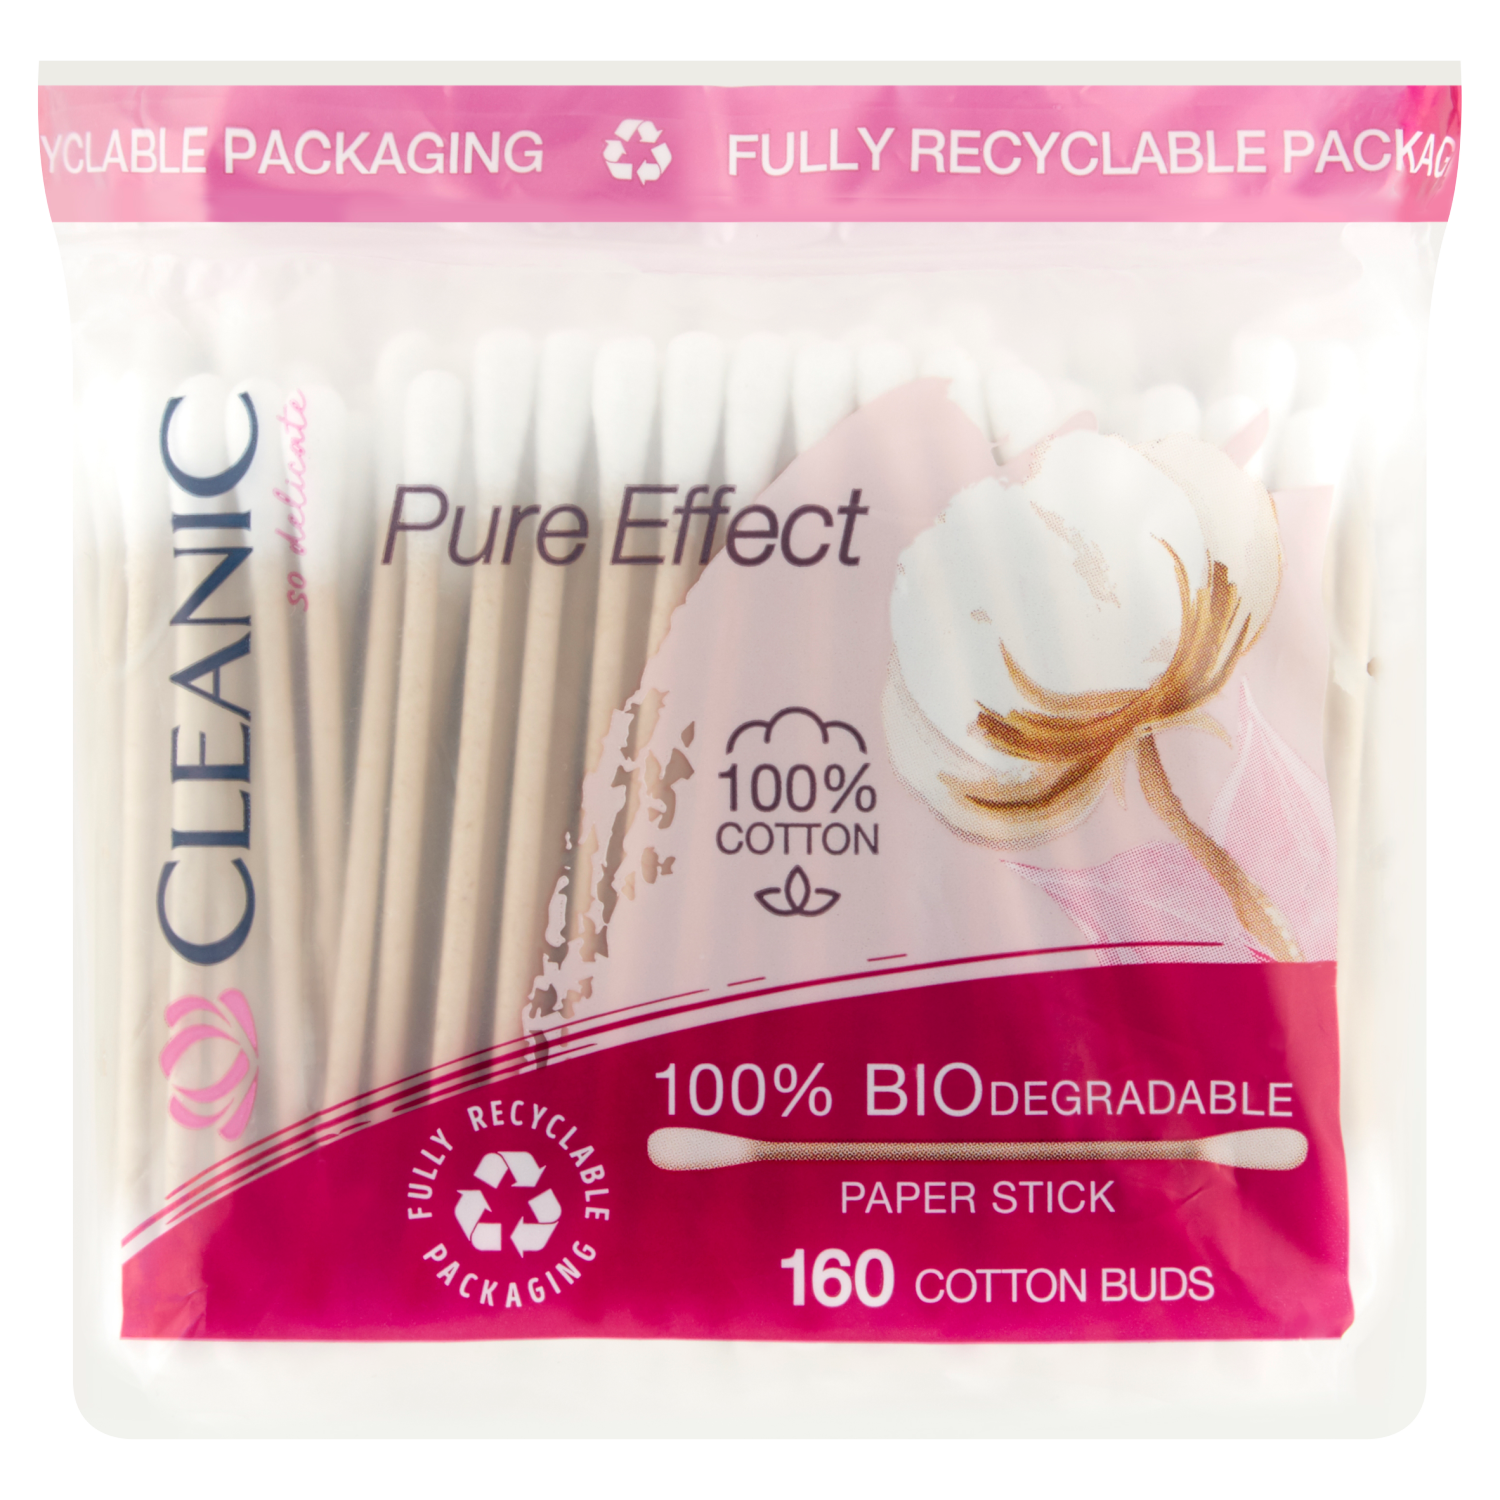 цена Cleanic Pure Effect ватные палочки, 160 шт/1 упаковка